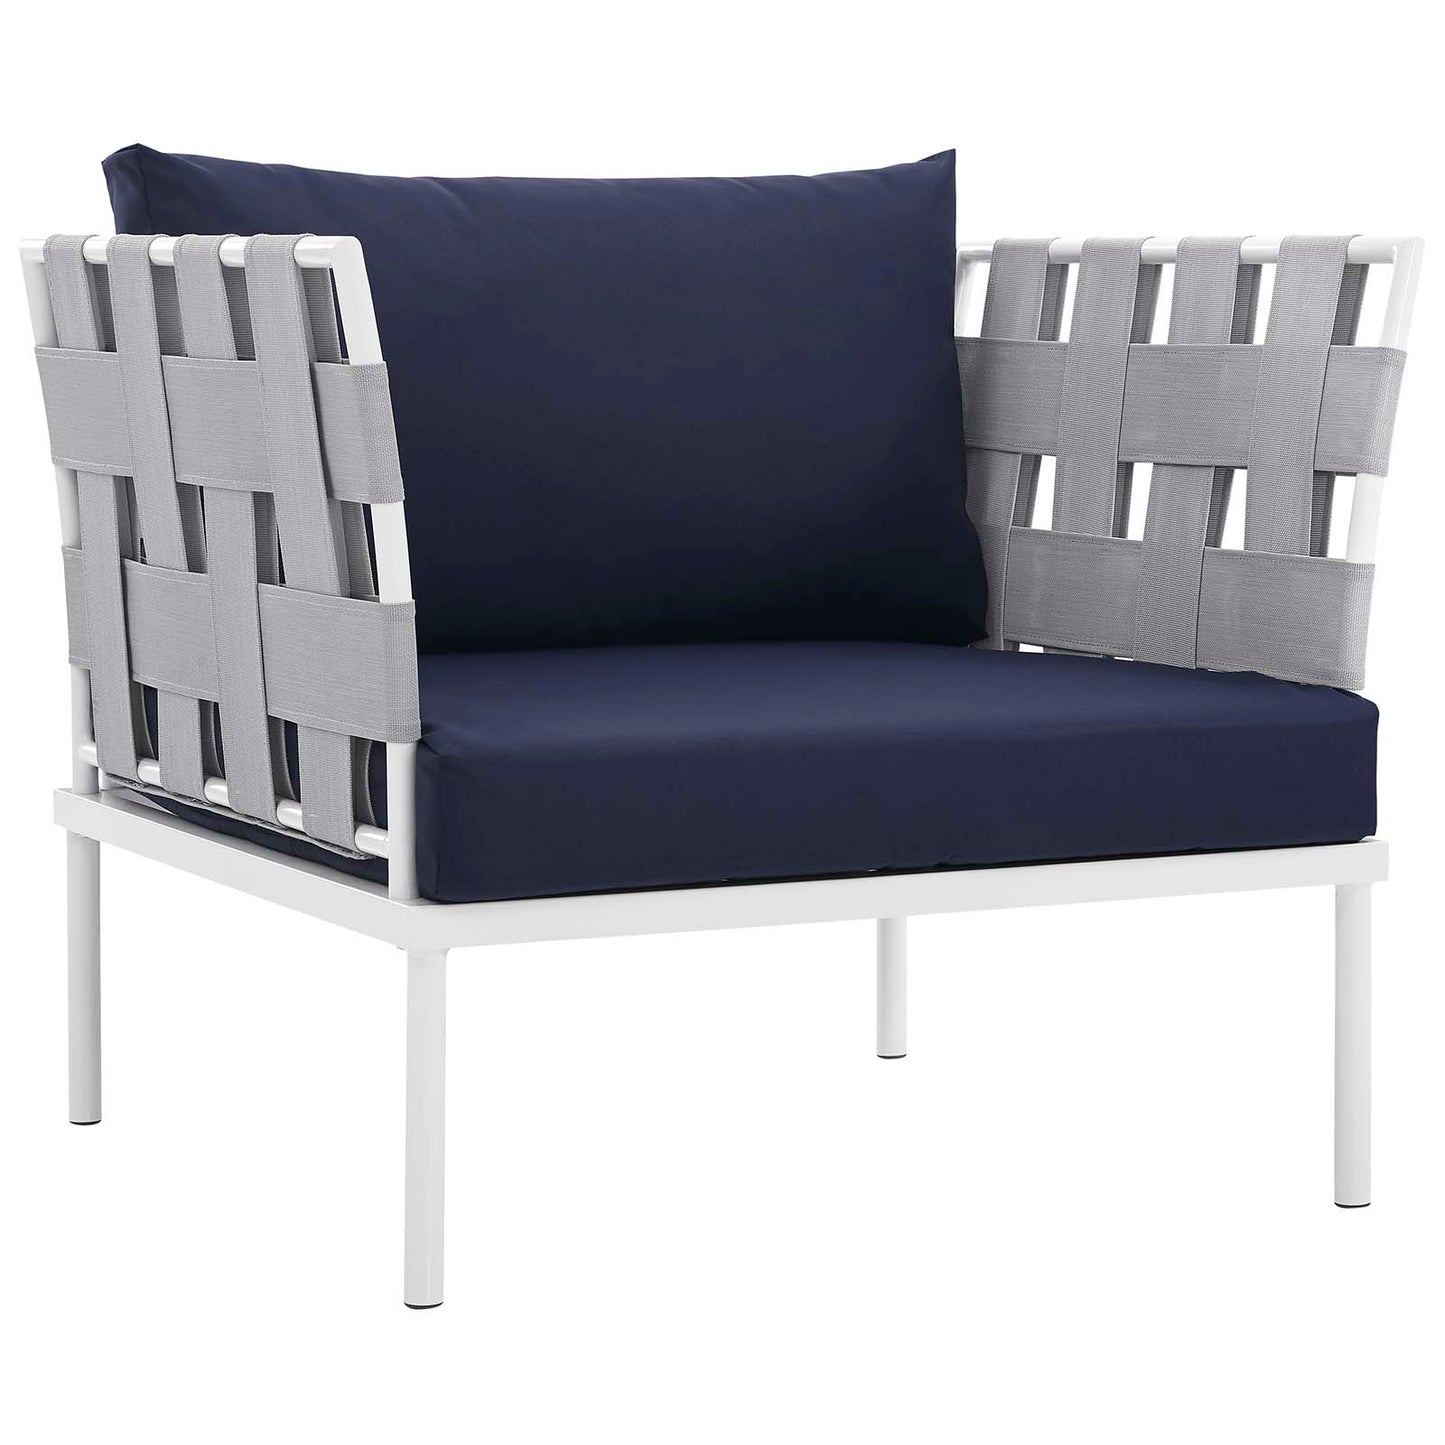 Harmony 10 Piece Outdoor Patio Aluminum Sectional Sofa Set White Navy EEI-2616-WHI-NAV-SET